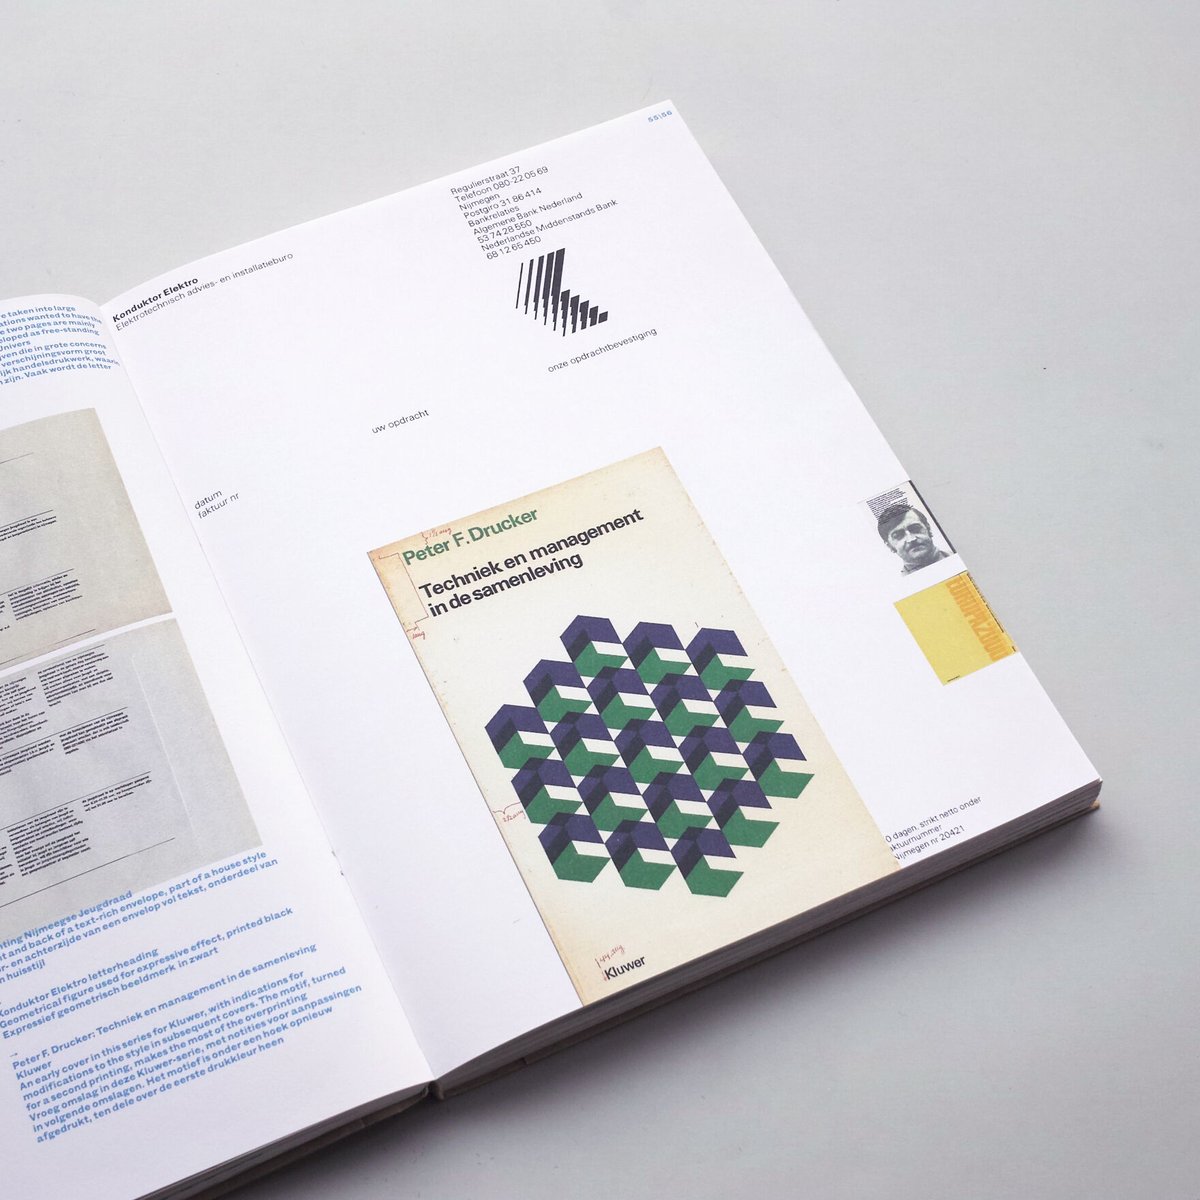 Karel Martens / printed matter/drukwerk | POST